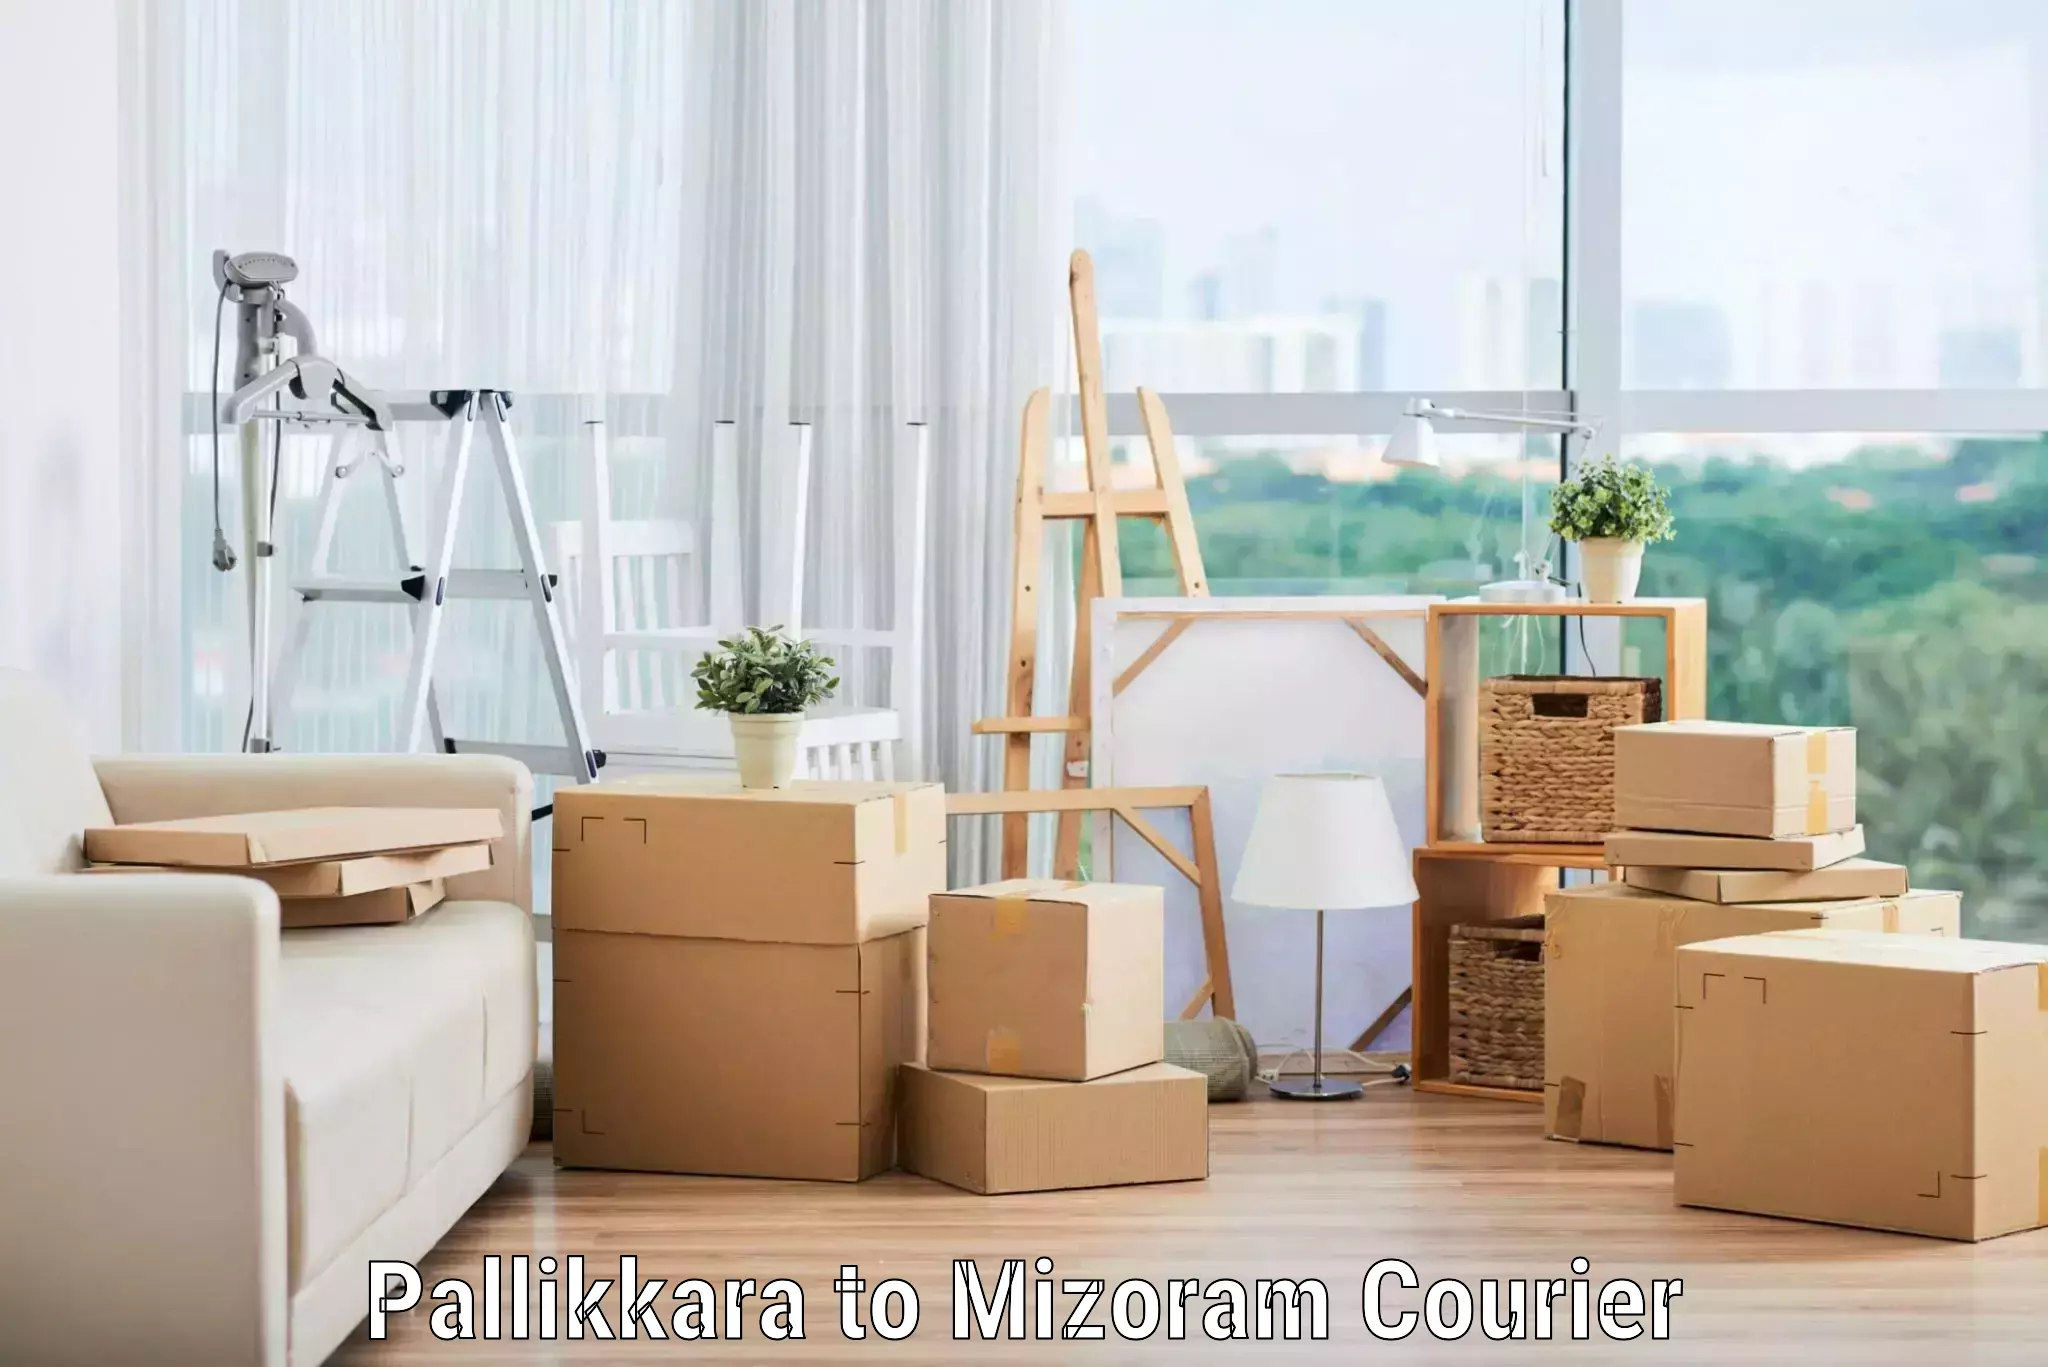 Trusted moving company Pallikkara to Mizoram